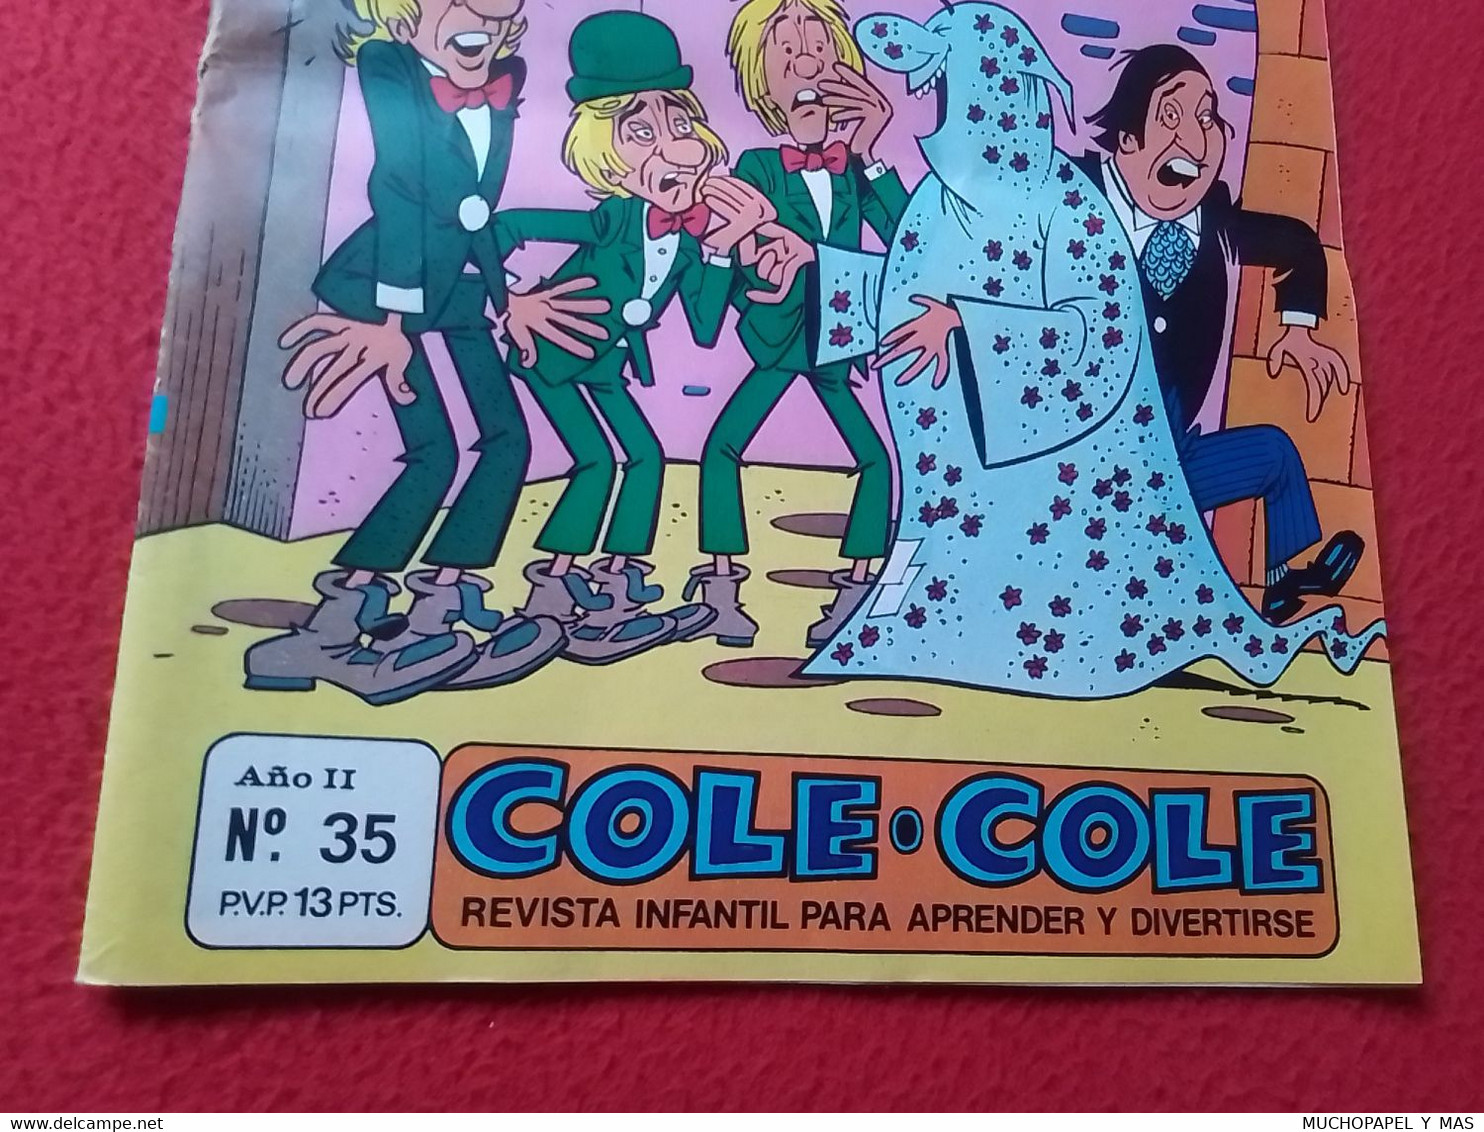 ANTIGUA REVISTA INFANTIL COMIC TEBEO COLE COLE GABY FOFO MILIKI Y FOFITO Nº 35 SEP. 1976 BRUGUERA LOS PAYASOS DE LA TELE - Old Comic Books